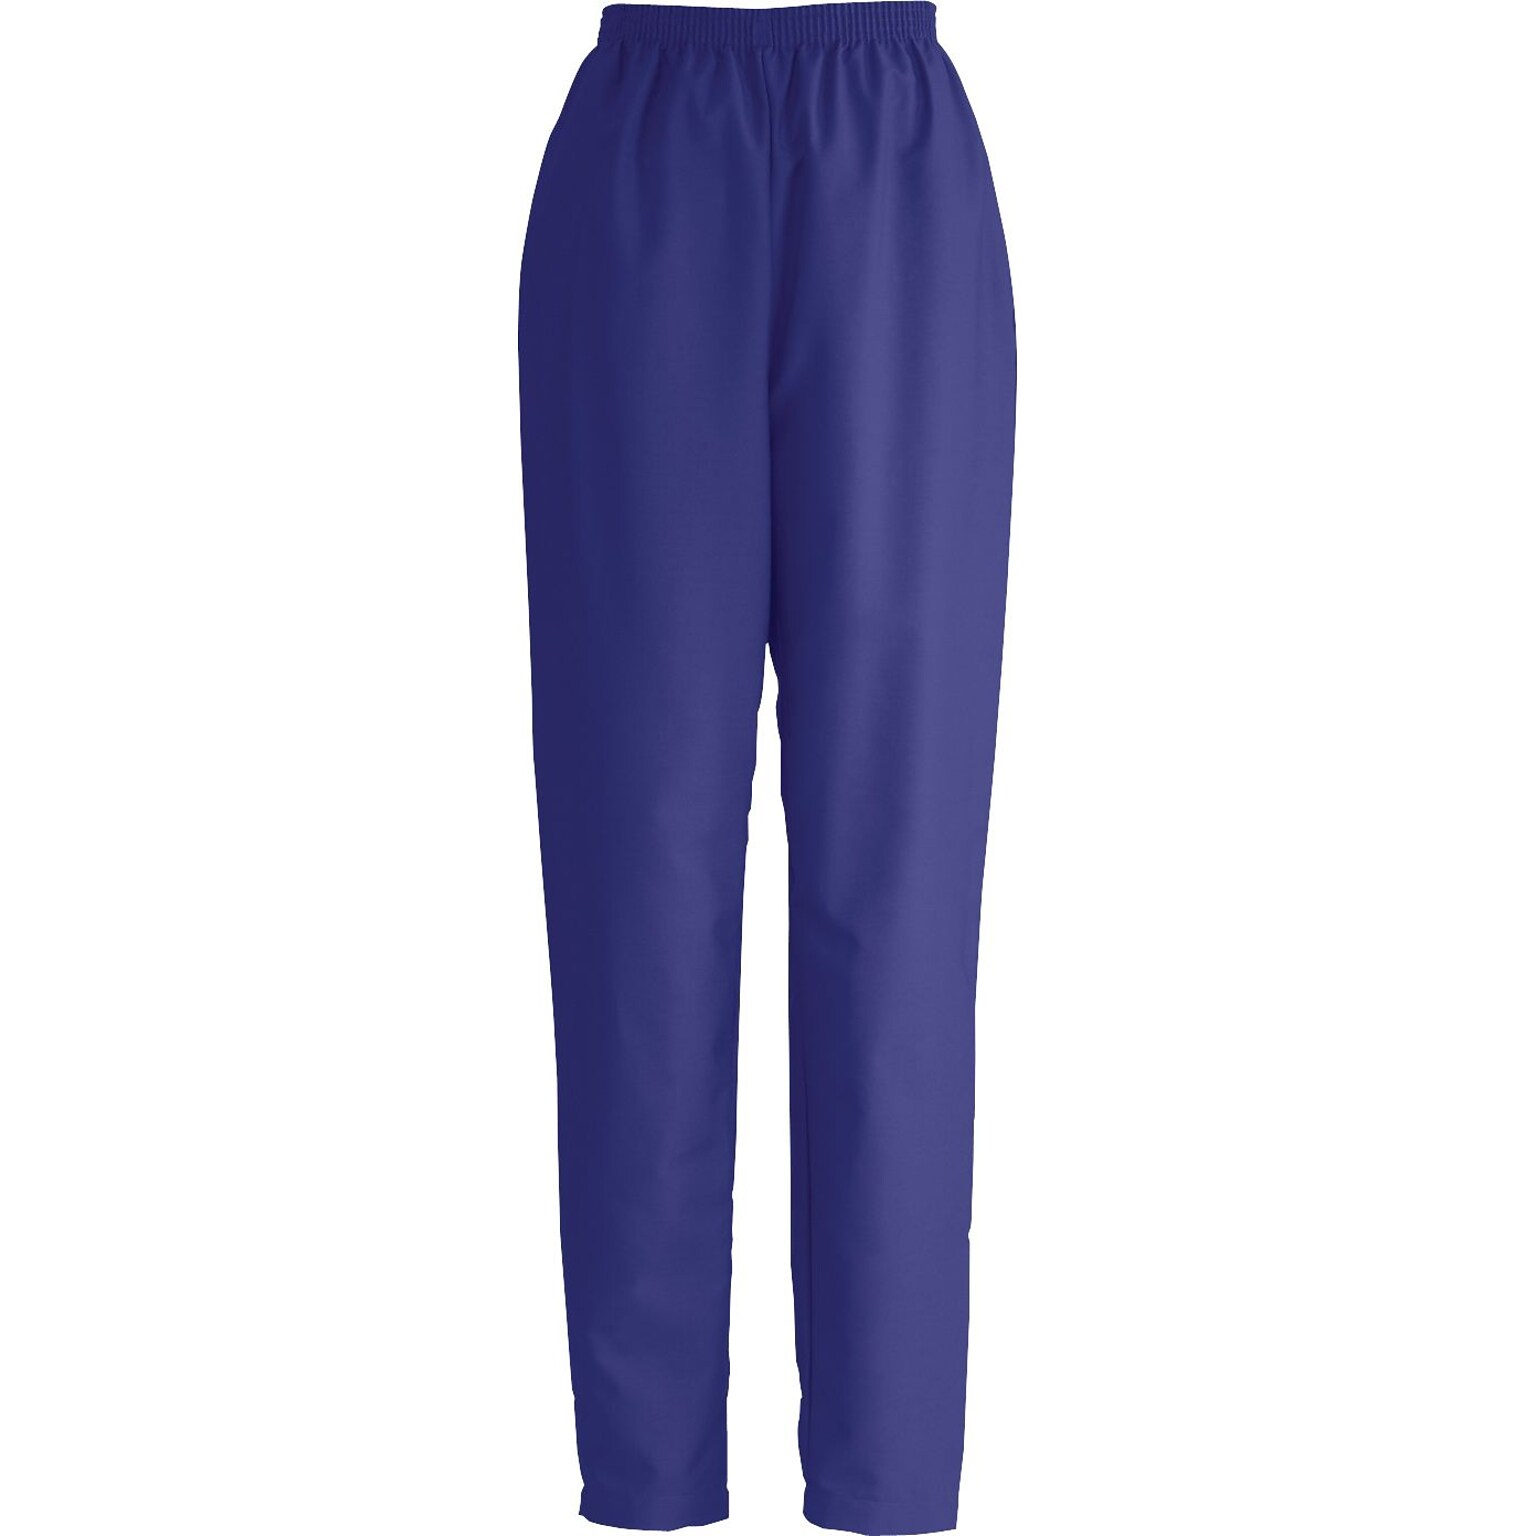 Medline ComfortEase Ladies Elastic Scrub Pants, Purple, Medium, Regular Length